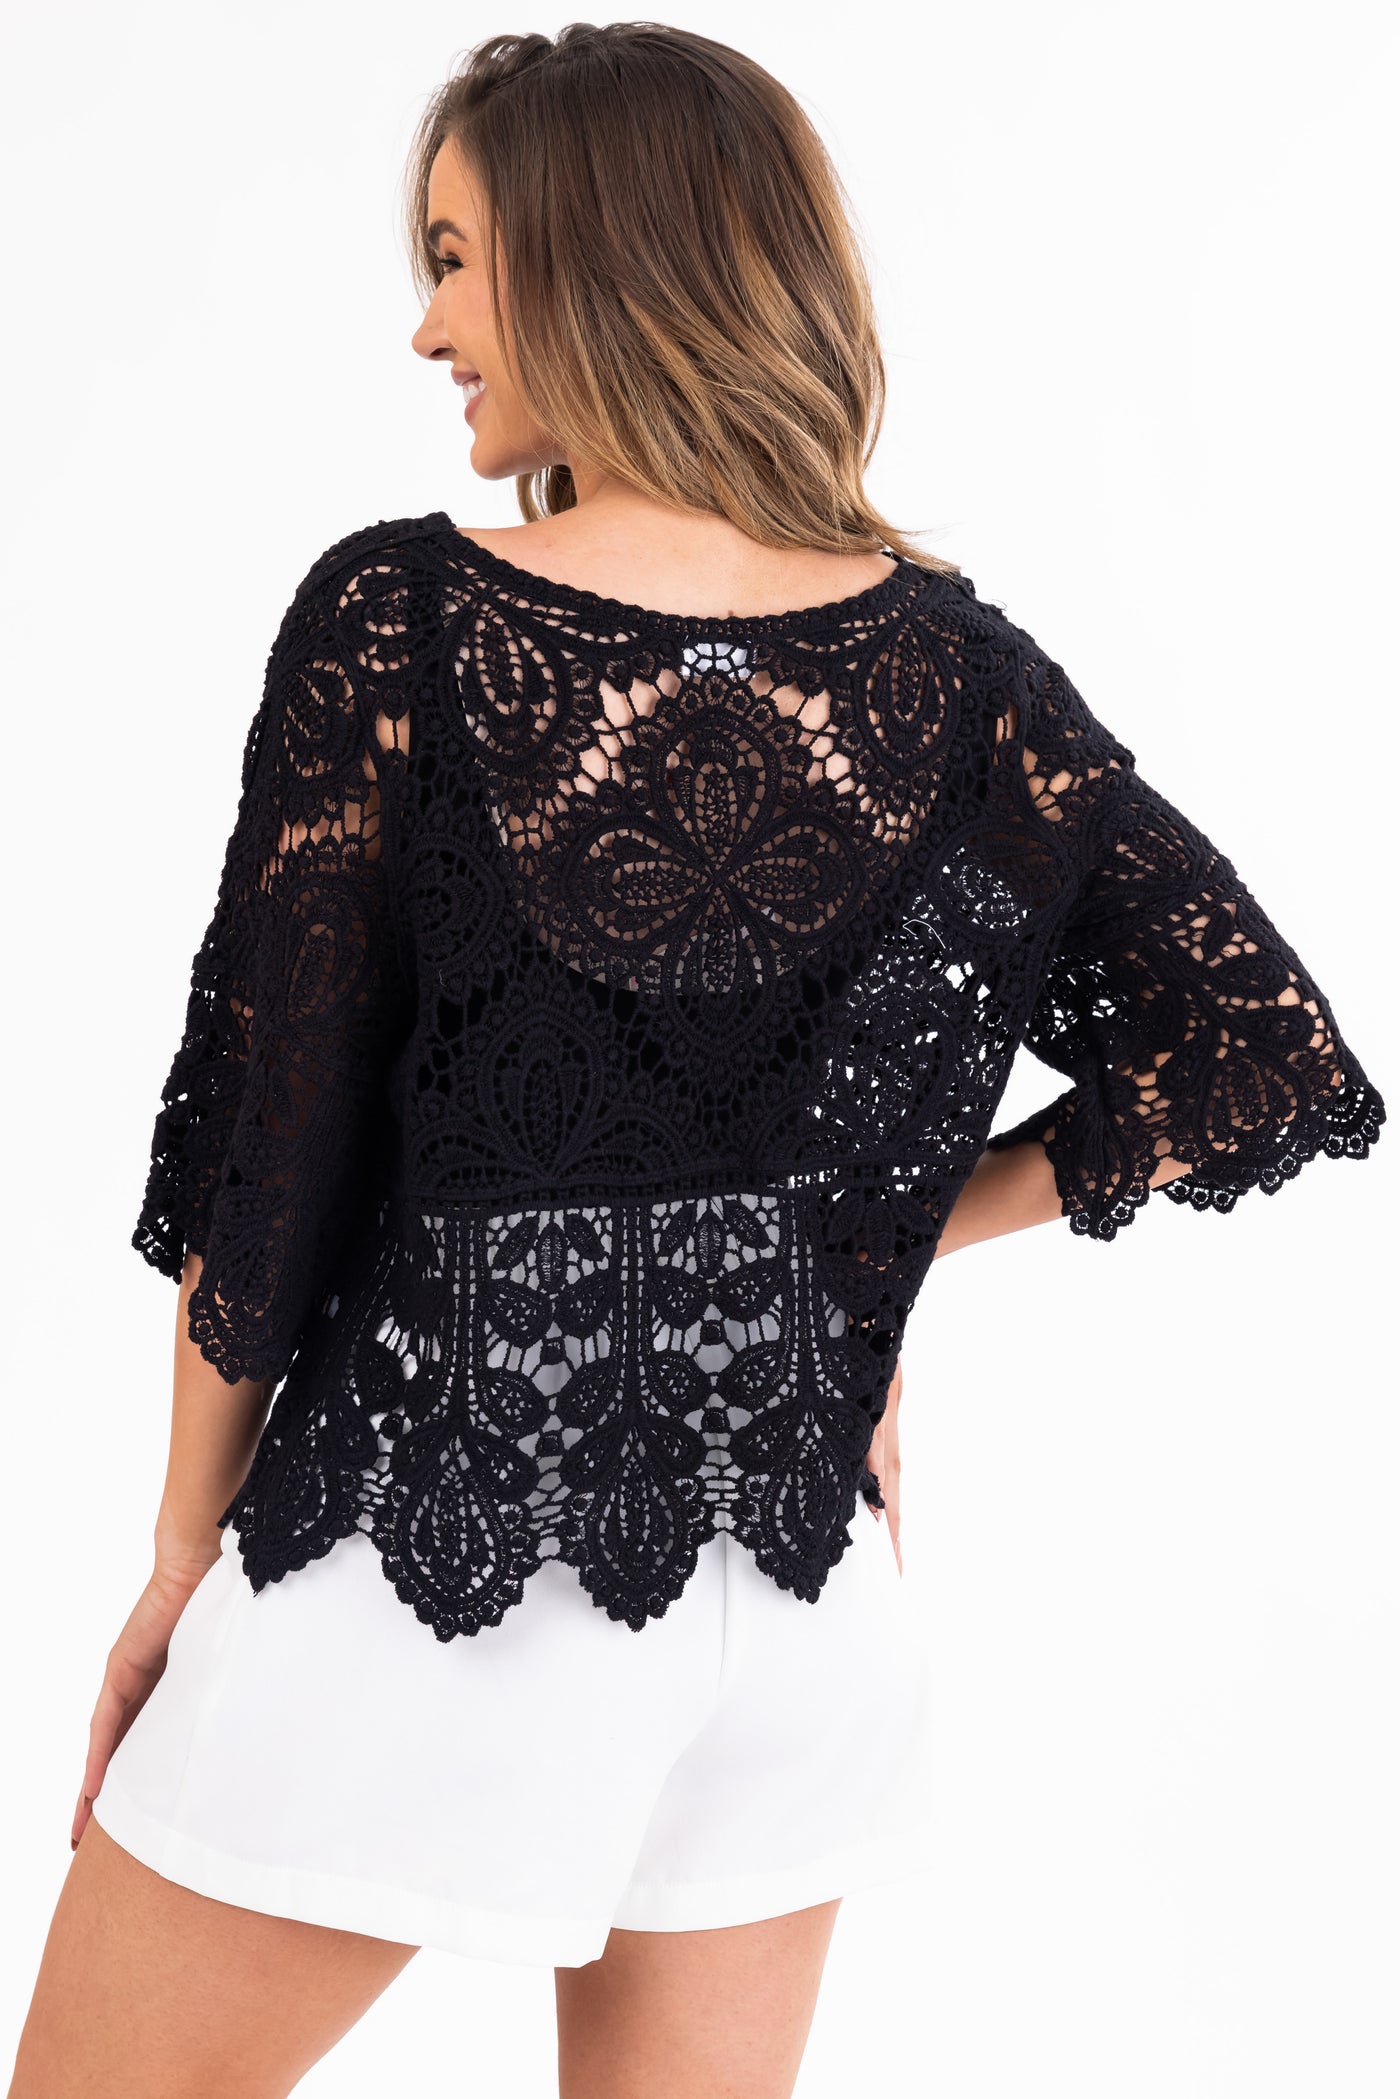 Black Crochet Lace Scalloped Half Sleeve Top